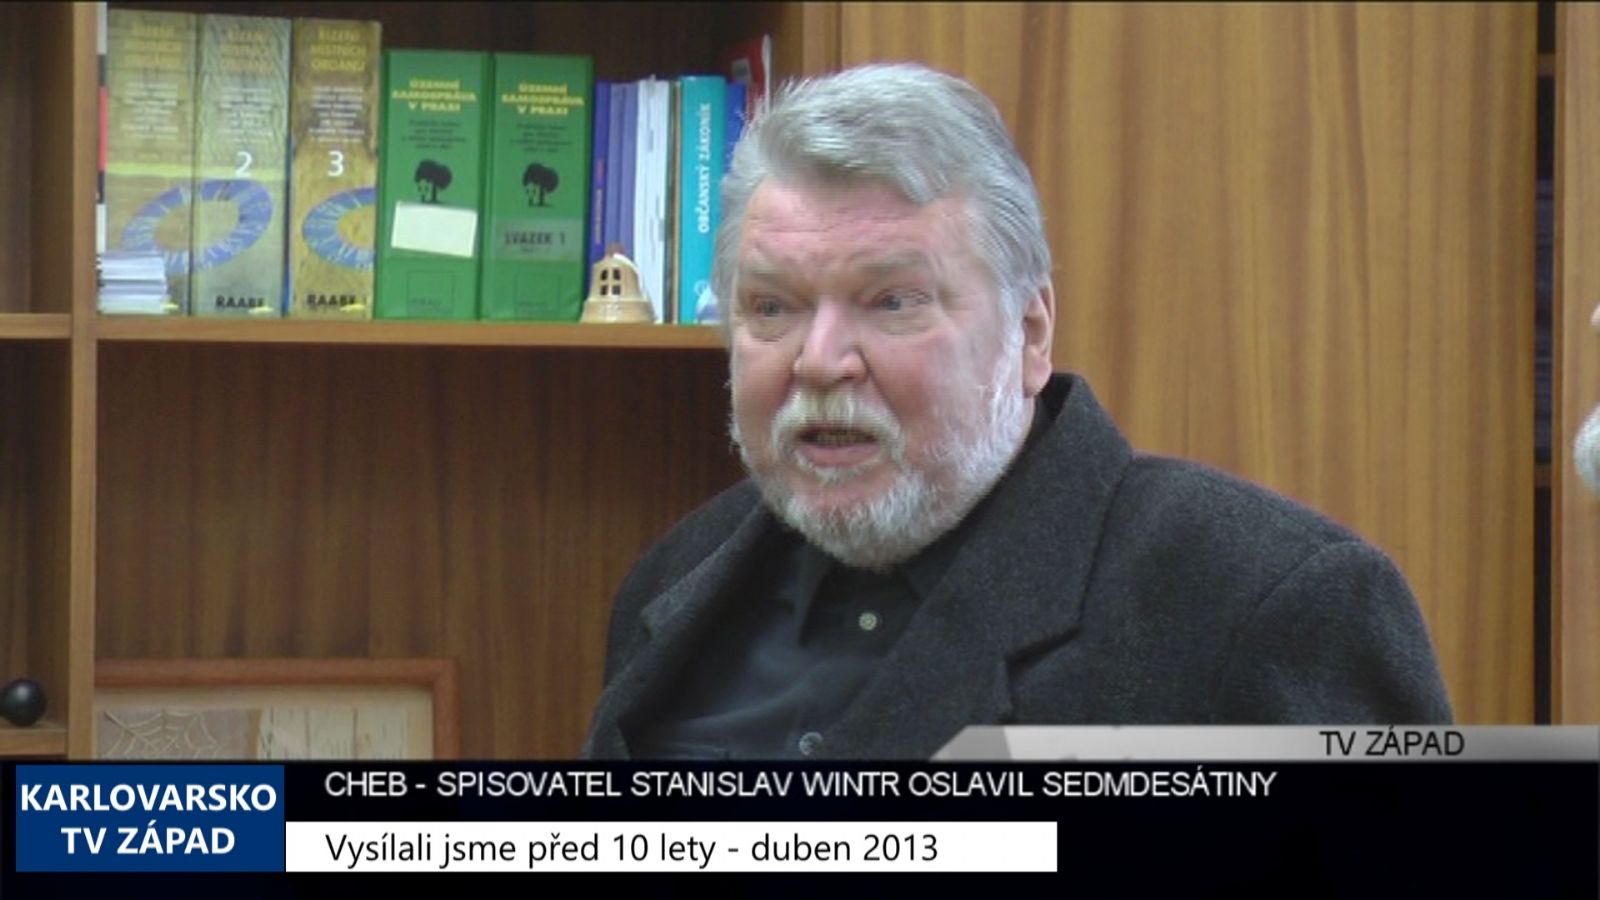 2013 – Cheb: Spisovatel Stanislav Wintr oslavil sedmdesátiny (4929) (TV Západ)